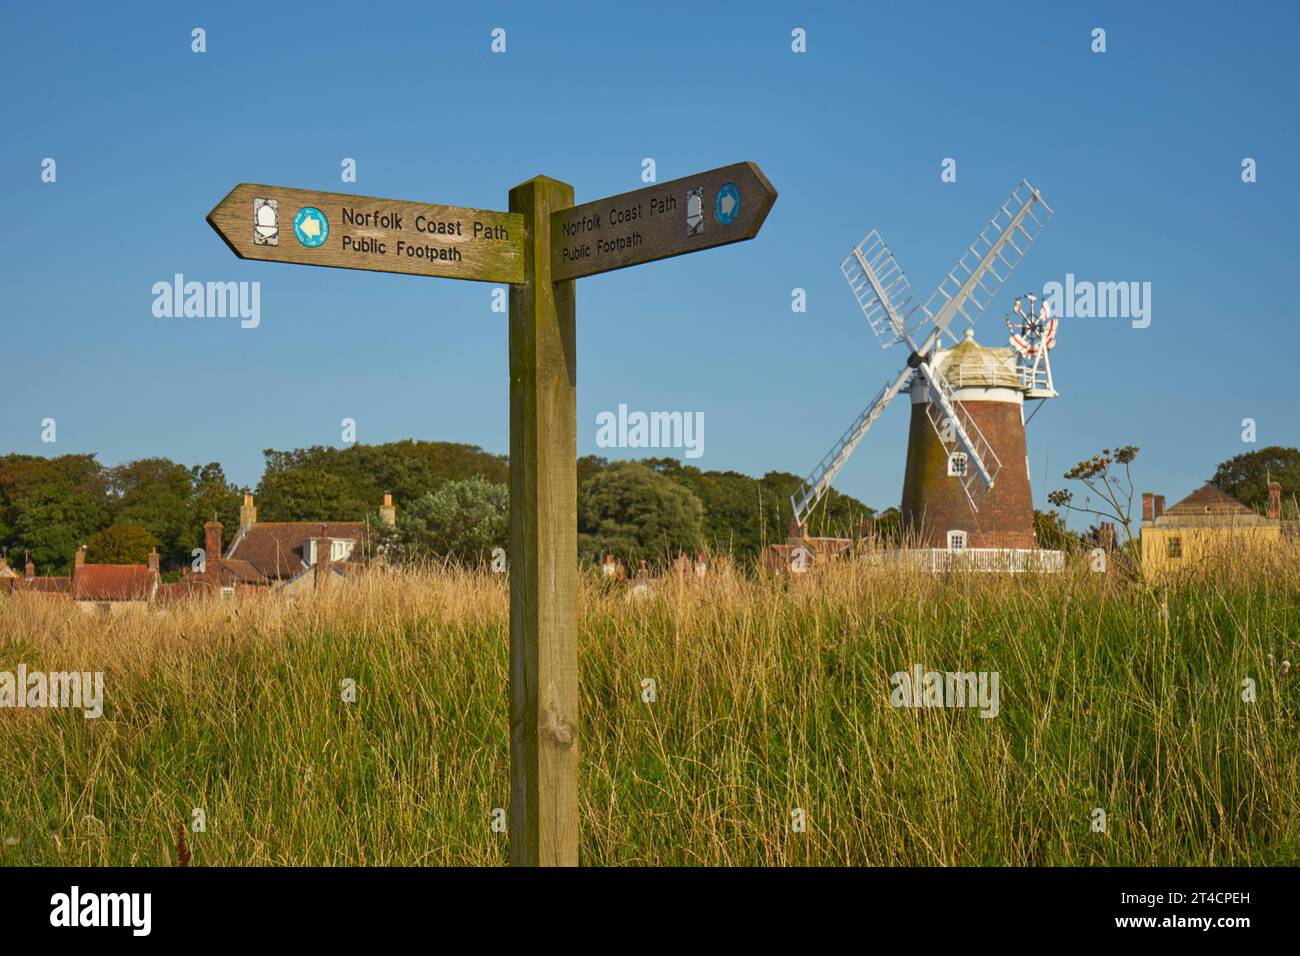 Cley Windmill from Norfolk Coastpath with Coastpath sign, near Blakeney, Norfolk Stock Photo